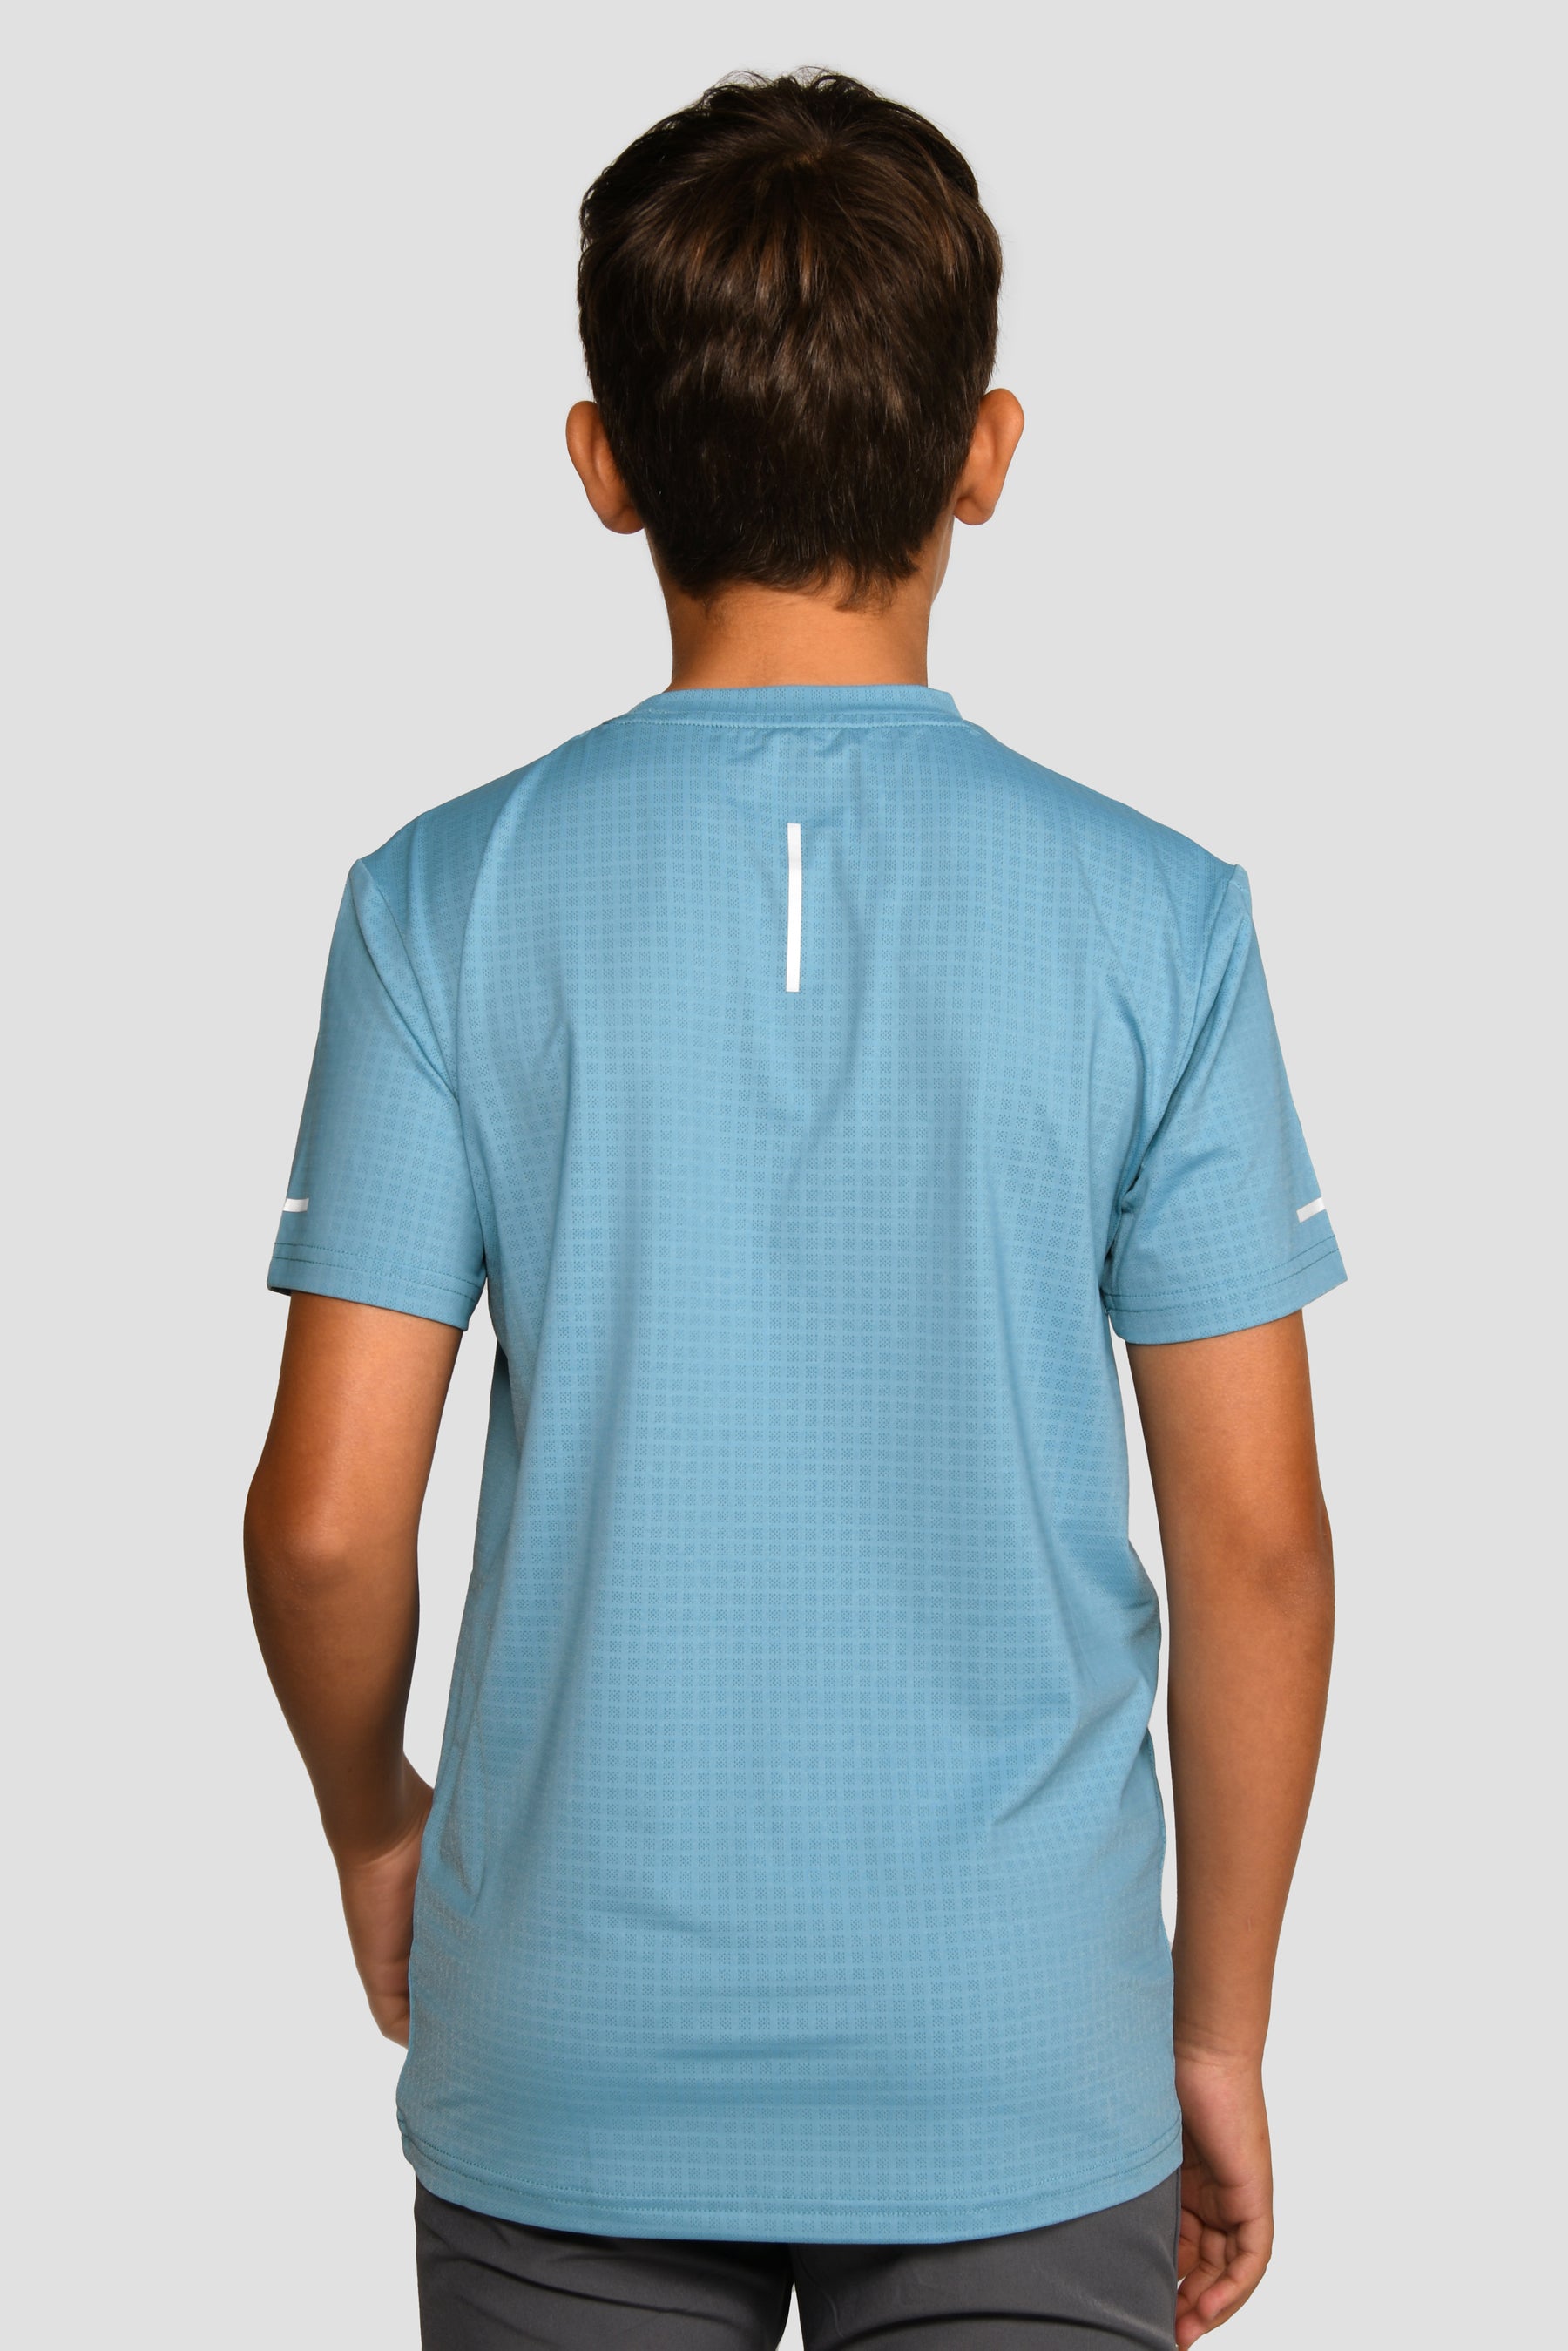 Junior Pace T-Shirt - Aqua - Montirex